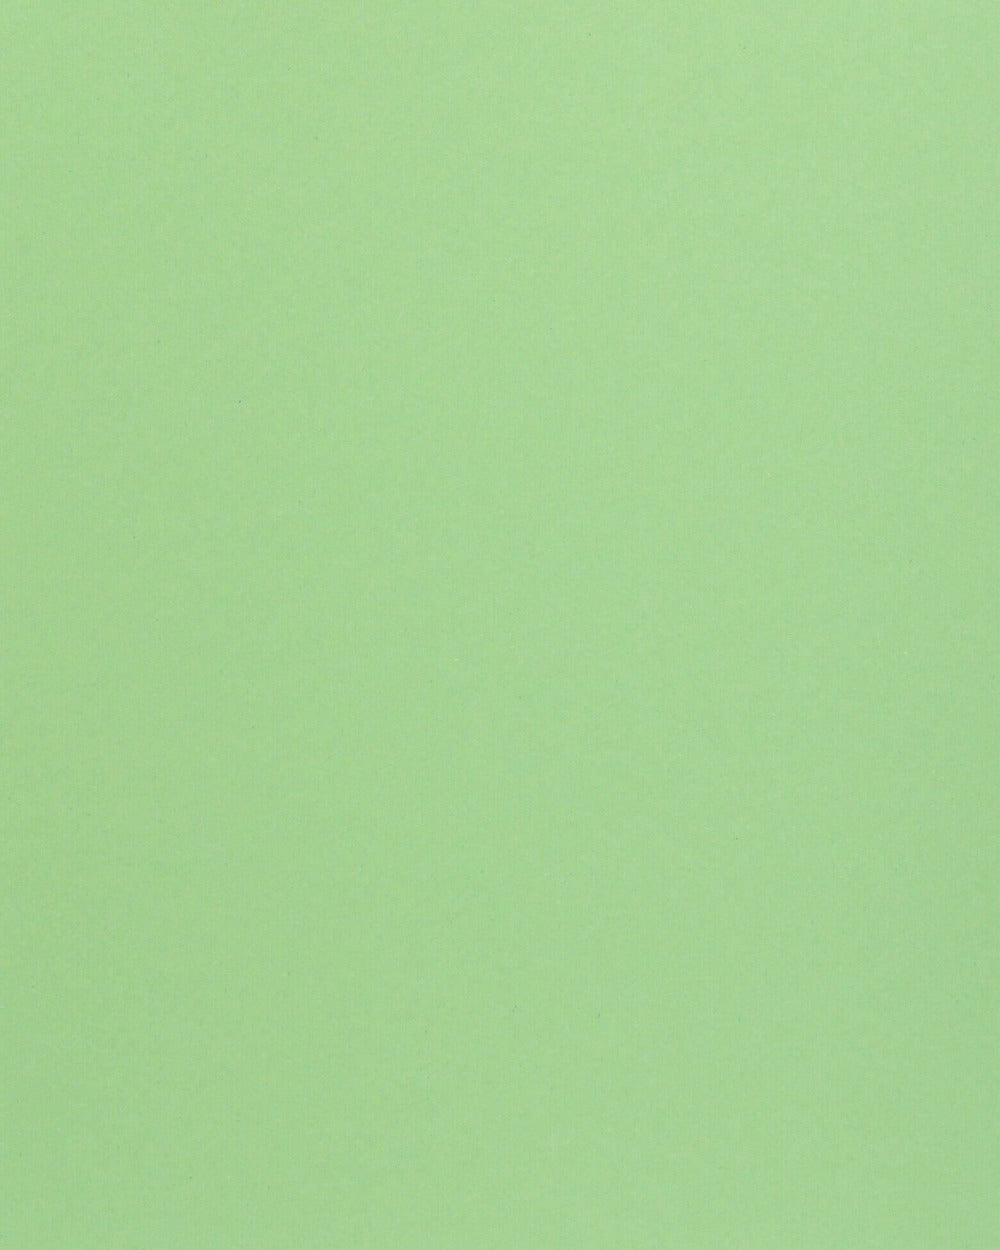 Verde Green| Woodstock Cardstock Paper Cover | 105 lb | 285 GSM / 8.5 x 11 / 25 Sheets